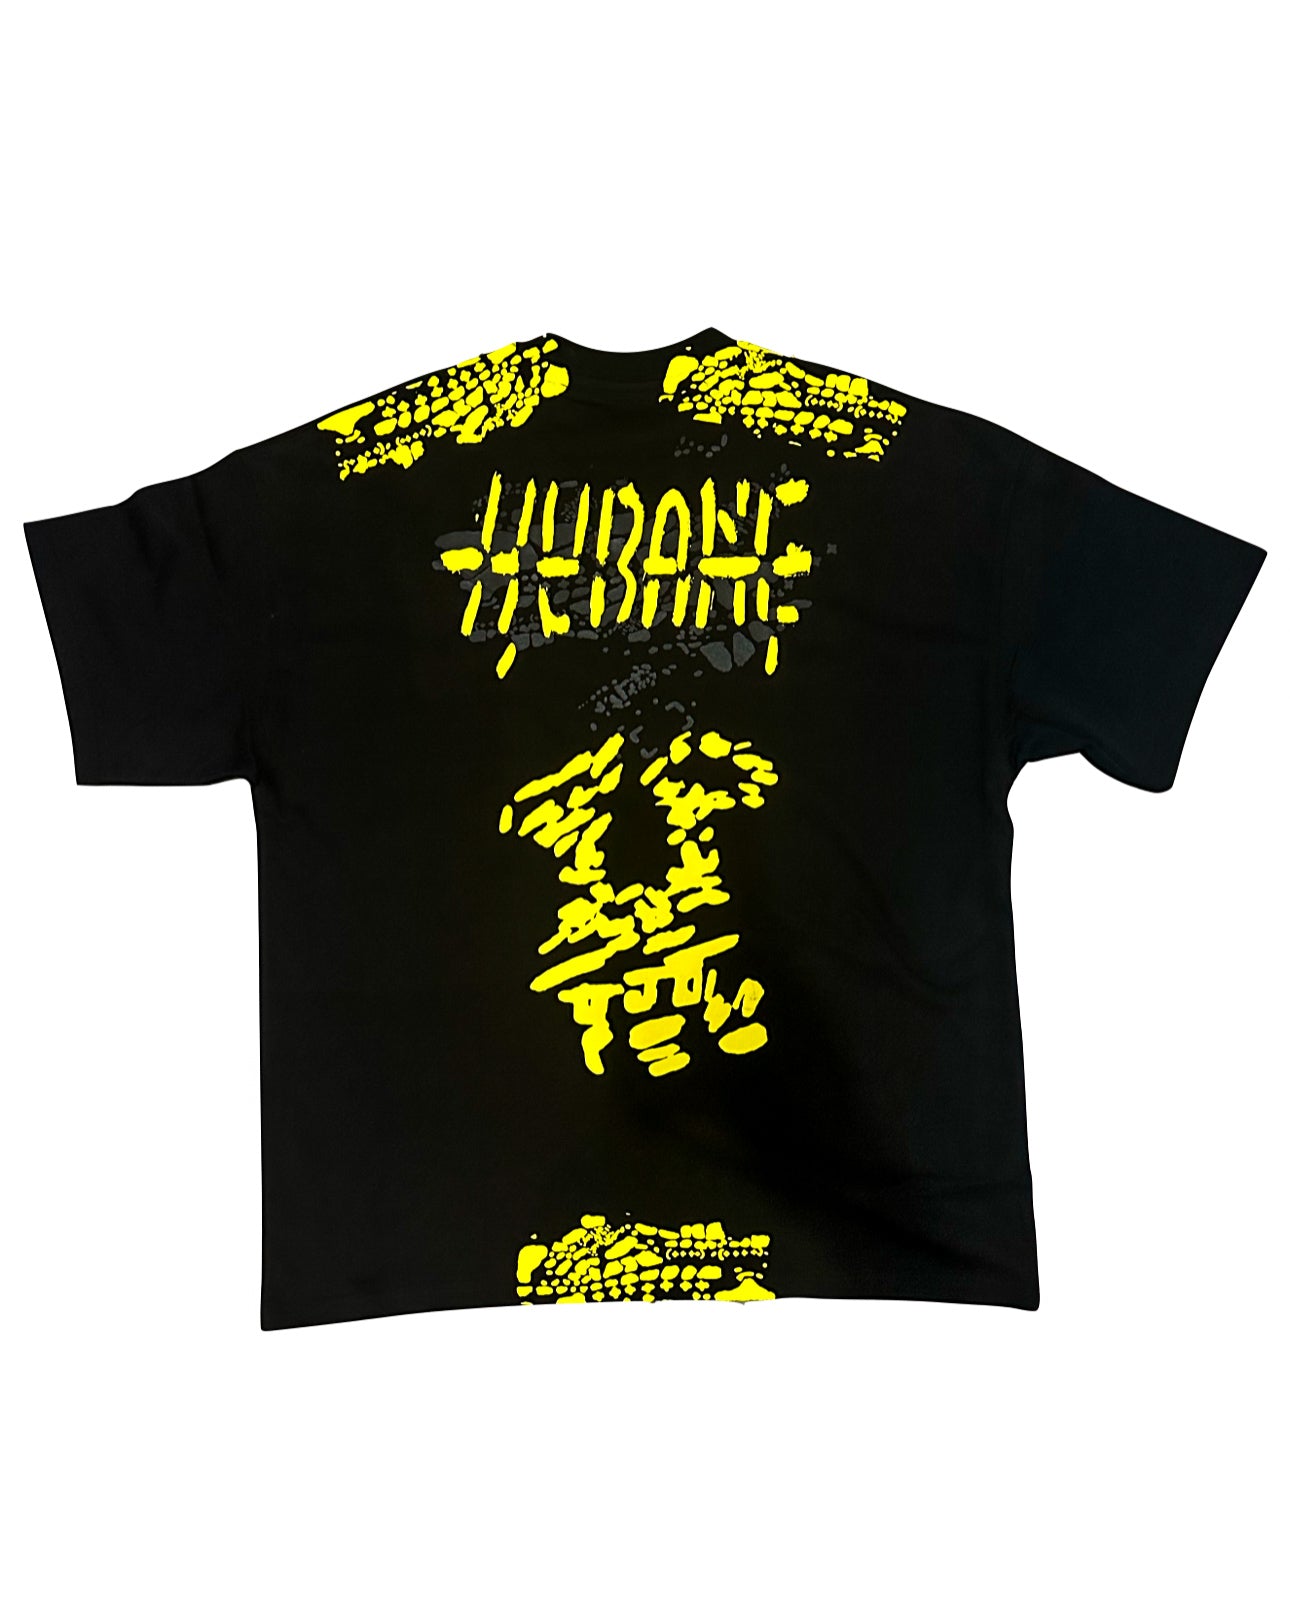 Hubane Noir T-shirt ( Yellow )